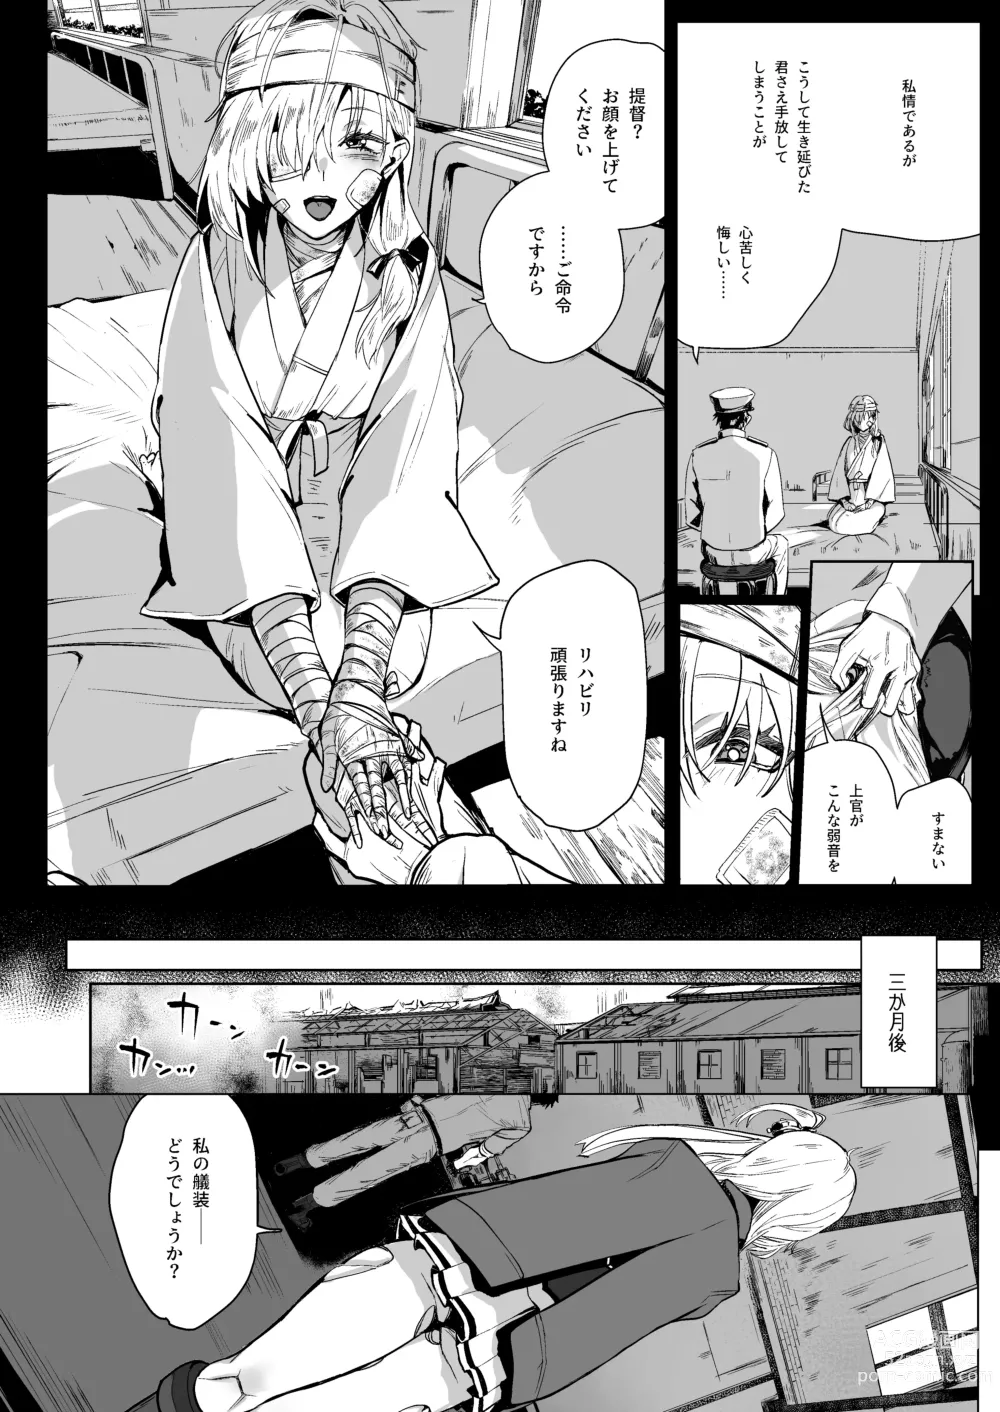 Page 3 of doujinshi SUZUTSUKI END ROLL